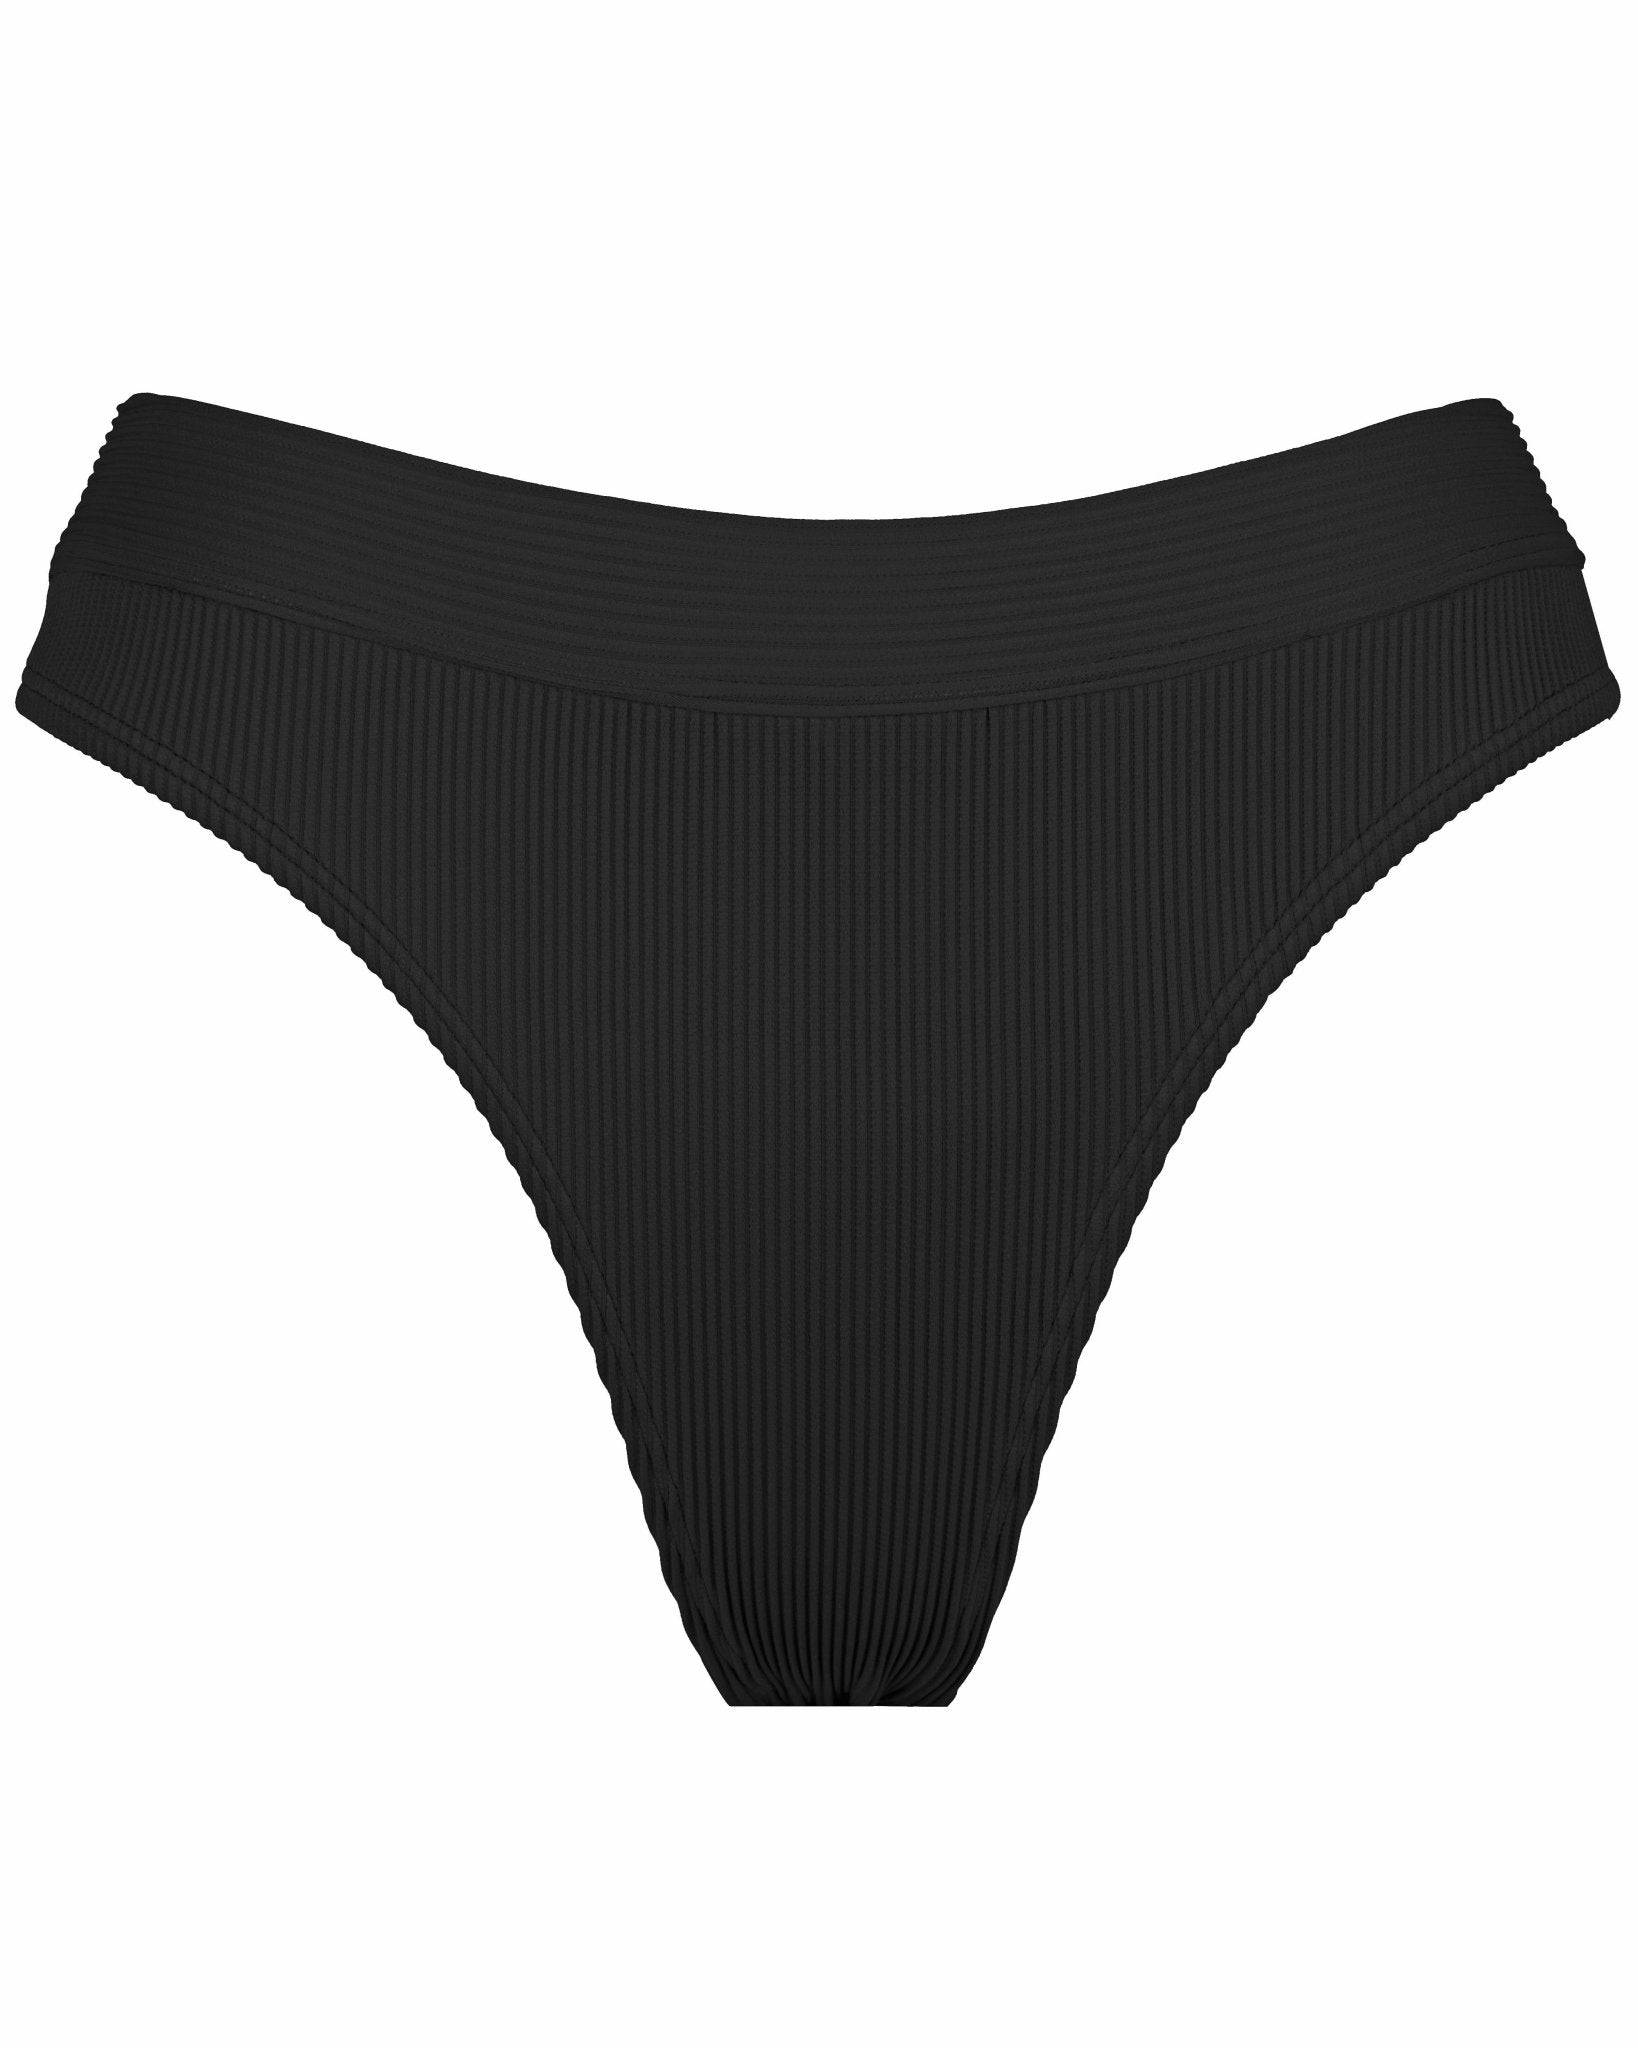 Ecuador Black Bikini Bottom-Cali Rae-stride